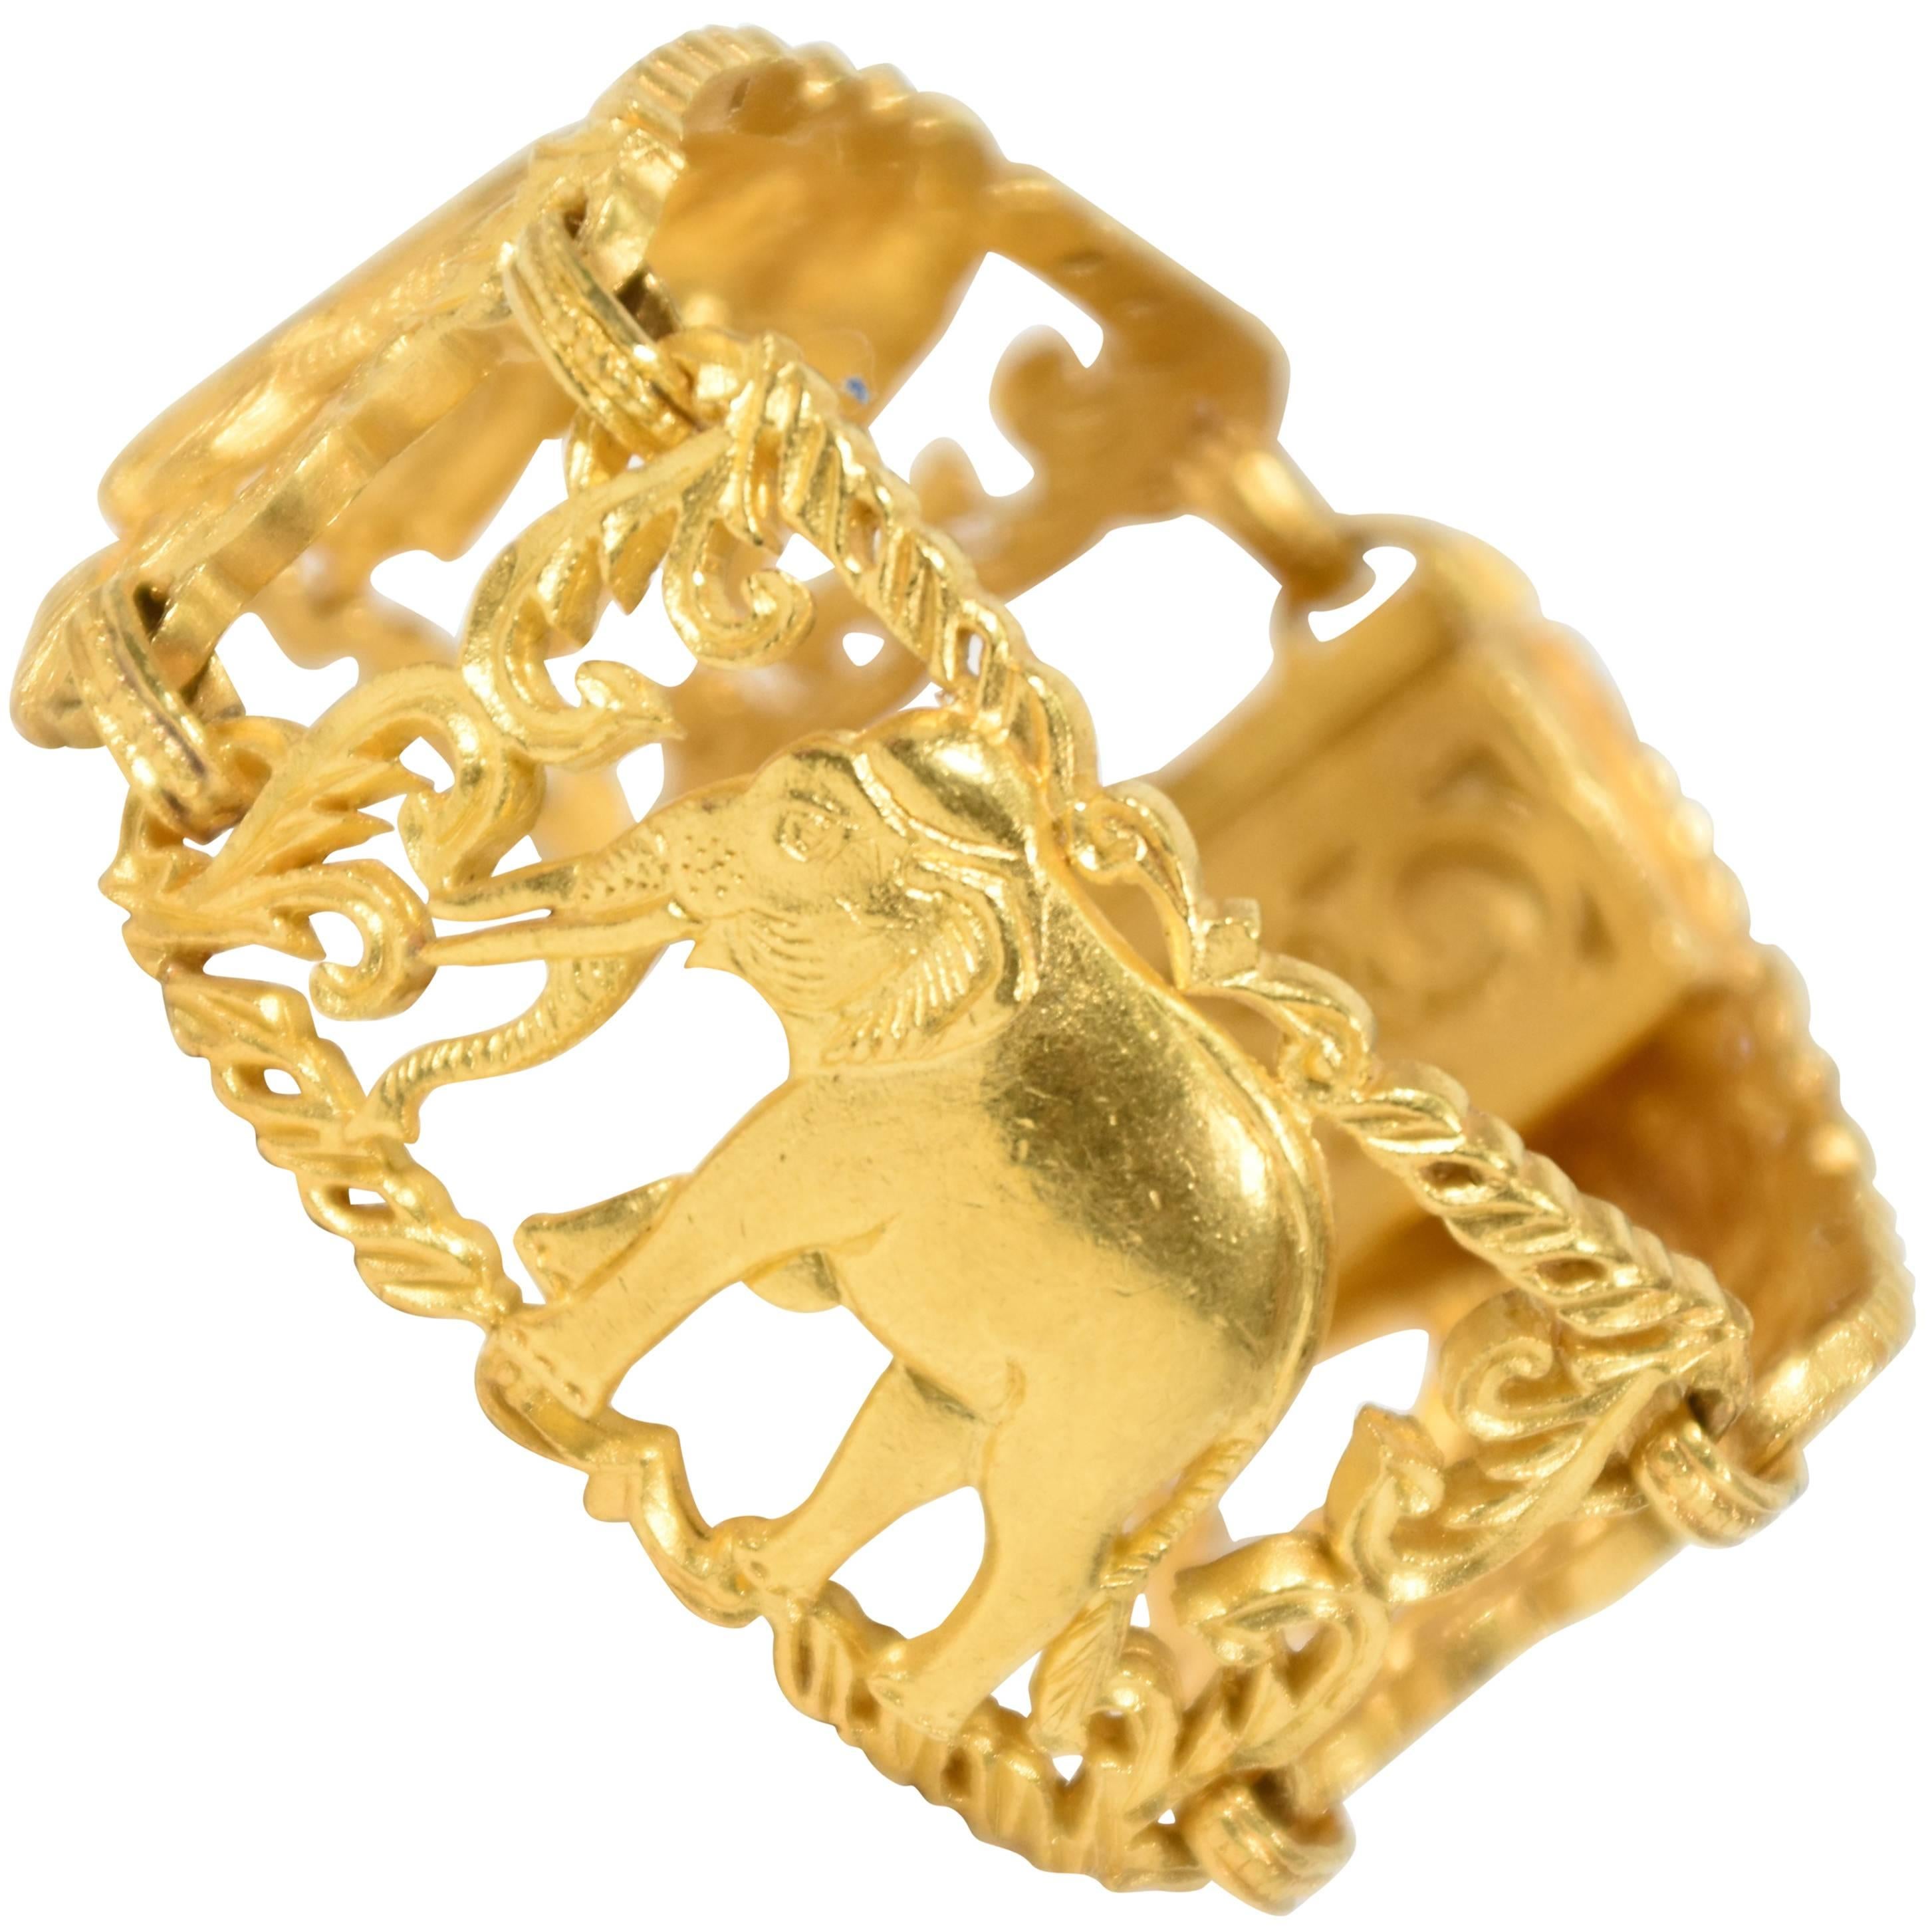 Cartier-Style 23 Carat Yellow Gold Cuff Bracelet of Elephants